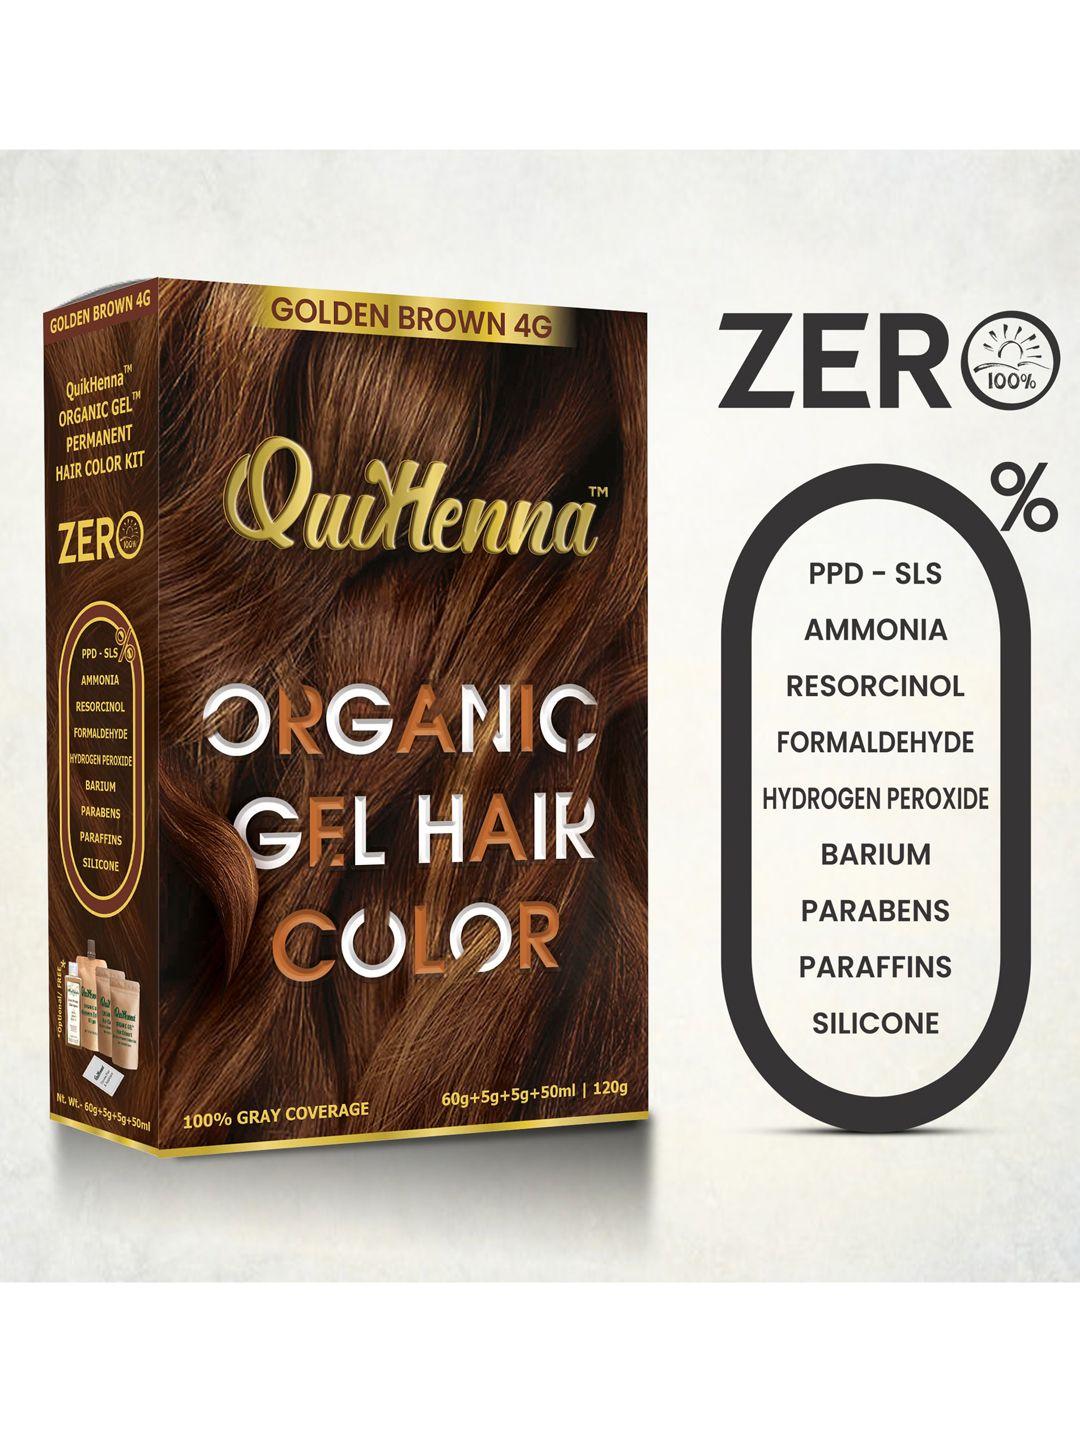 quikhenna damage free organic gel hair color 120 g - golden brown 4g